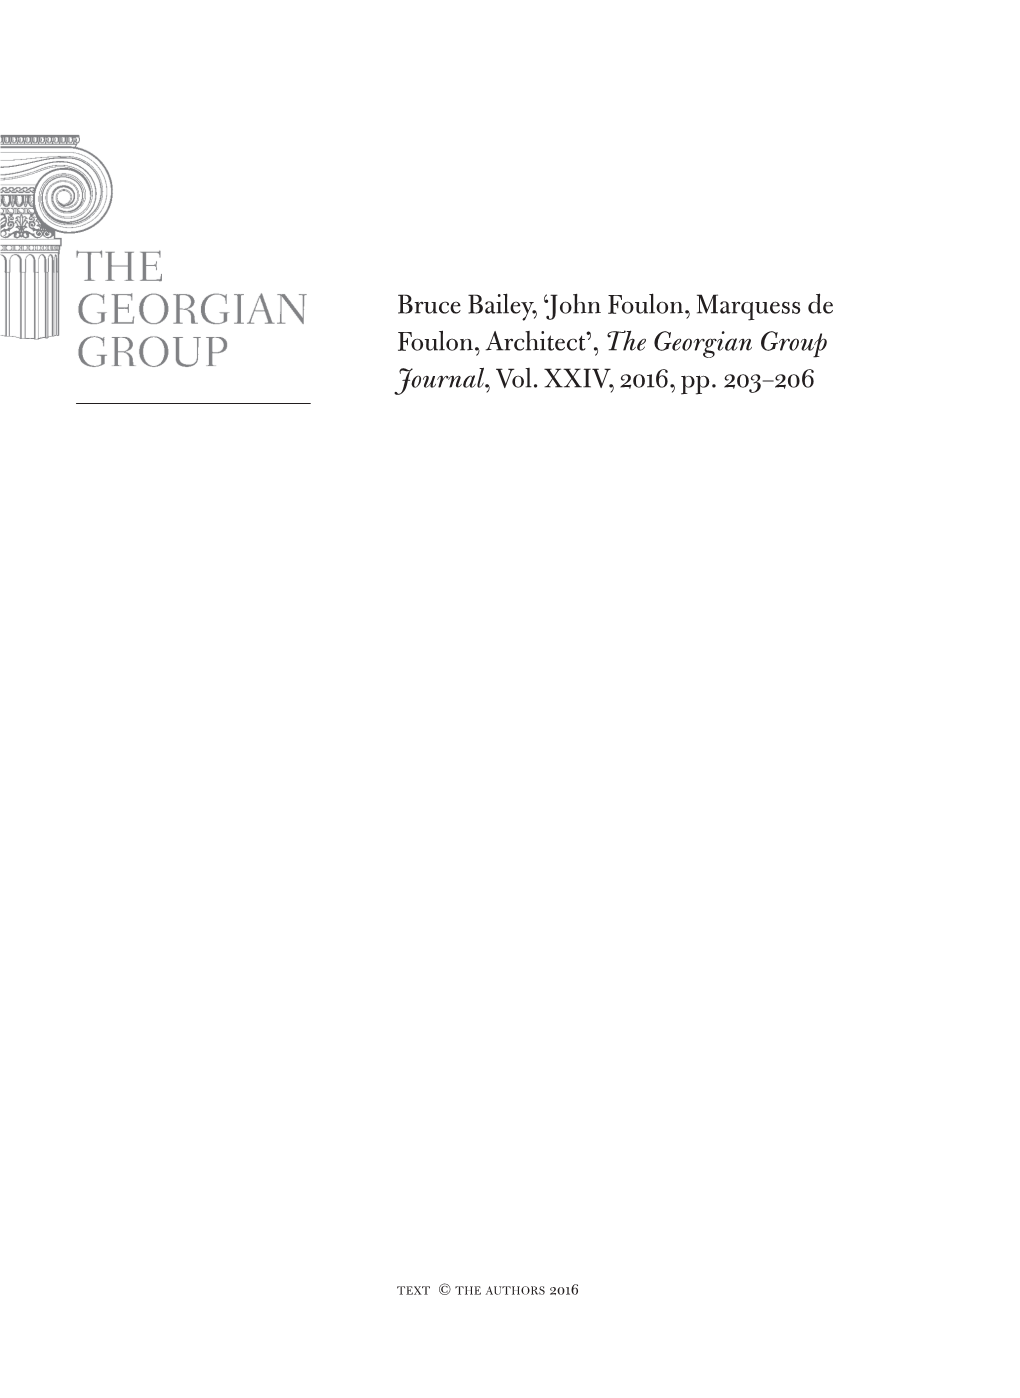 John Foulon, Marquess De Foulon, Architect’, the Georgian Group Journal, Vol